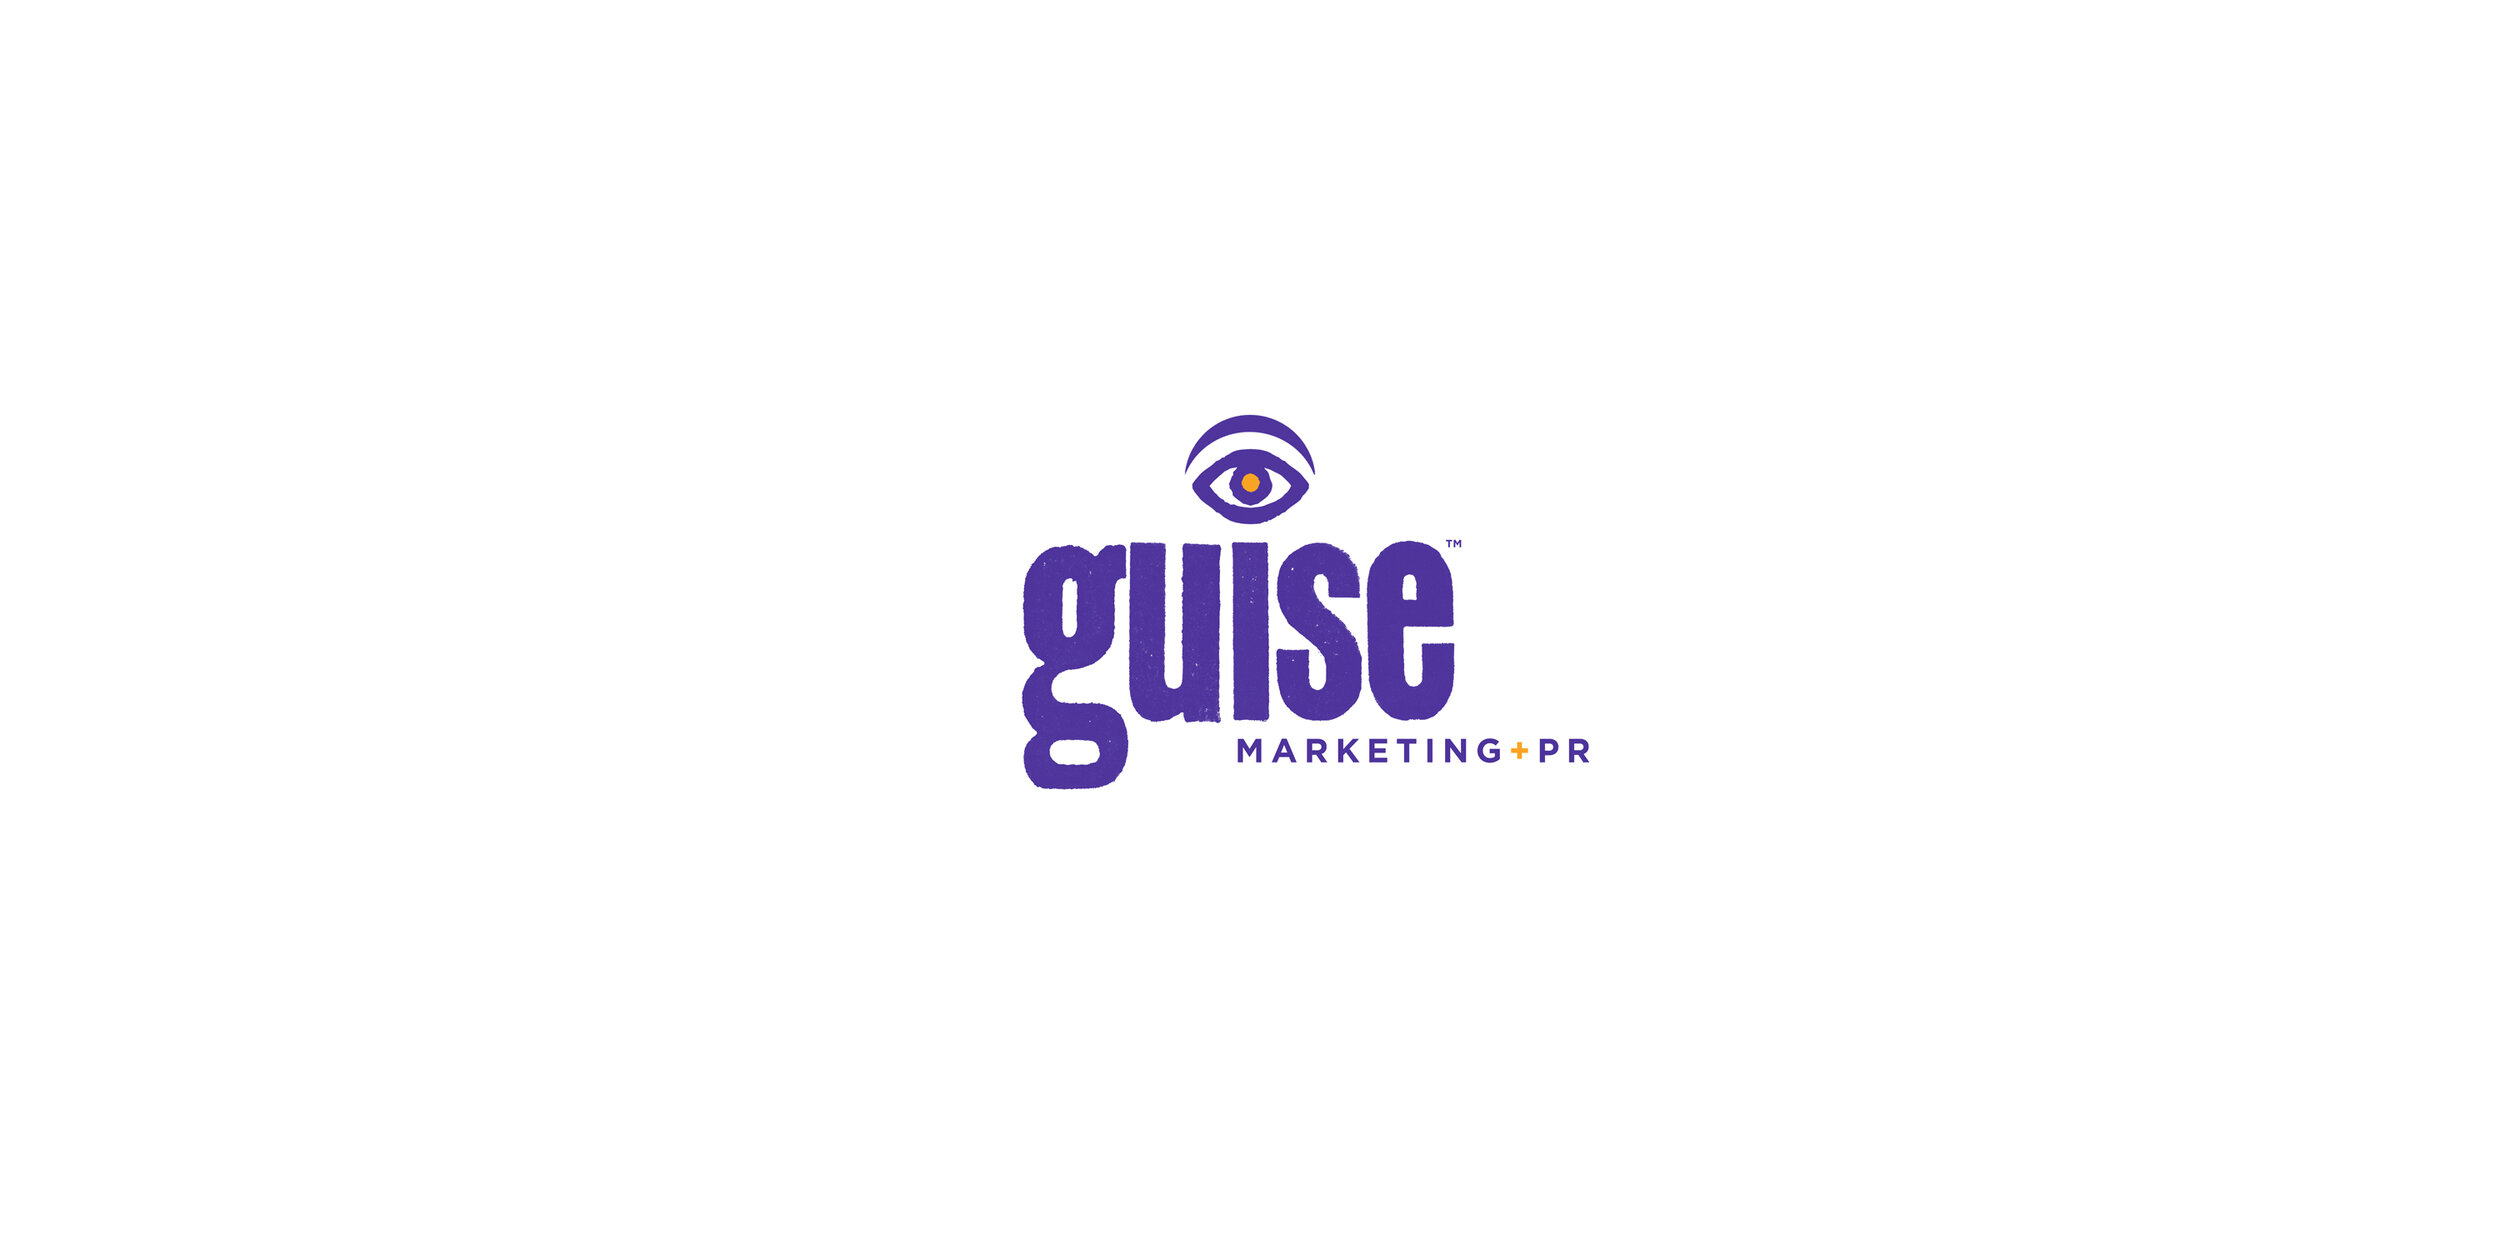 Guise Marketing + PR